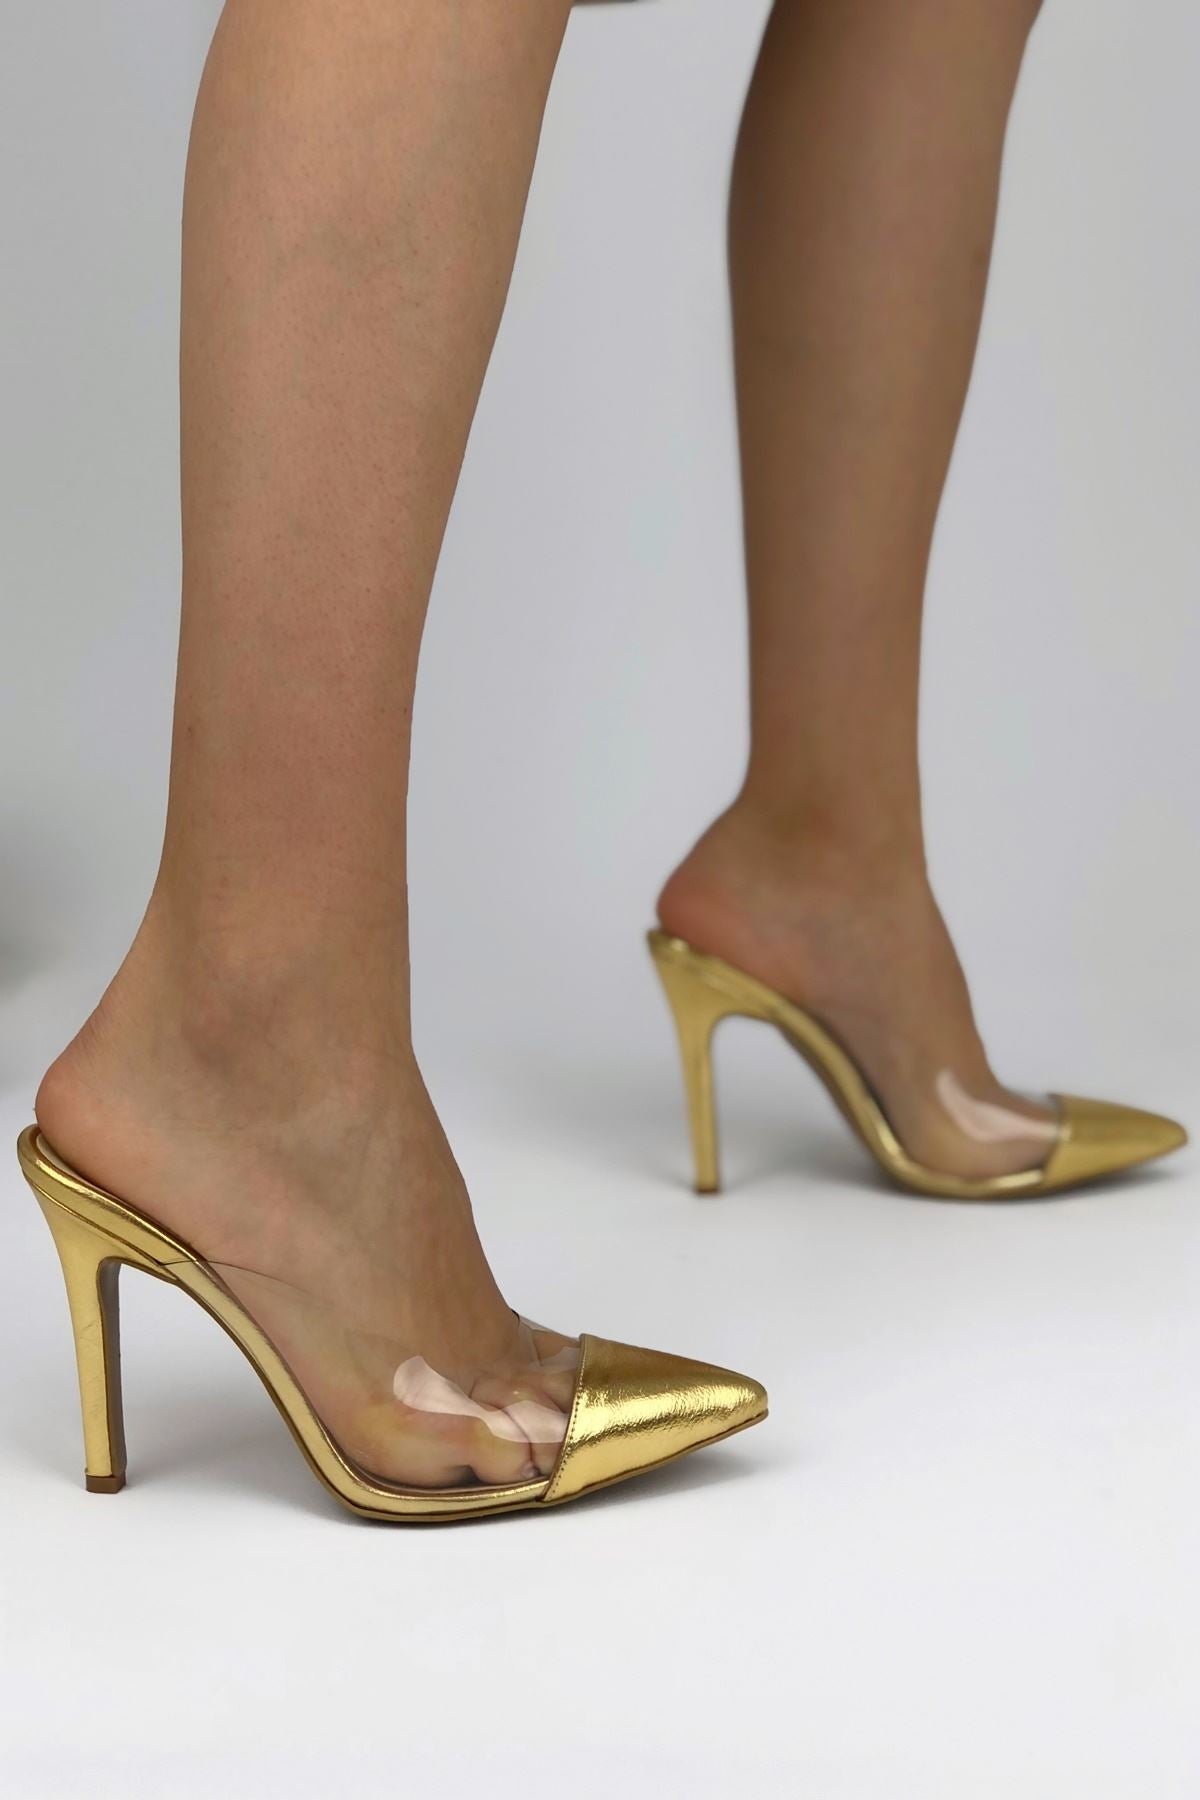 Image of Women's Shiny Gold Heeled Slippers